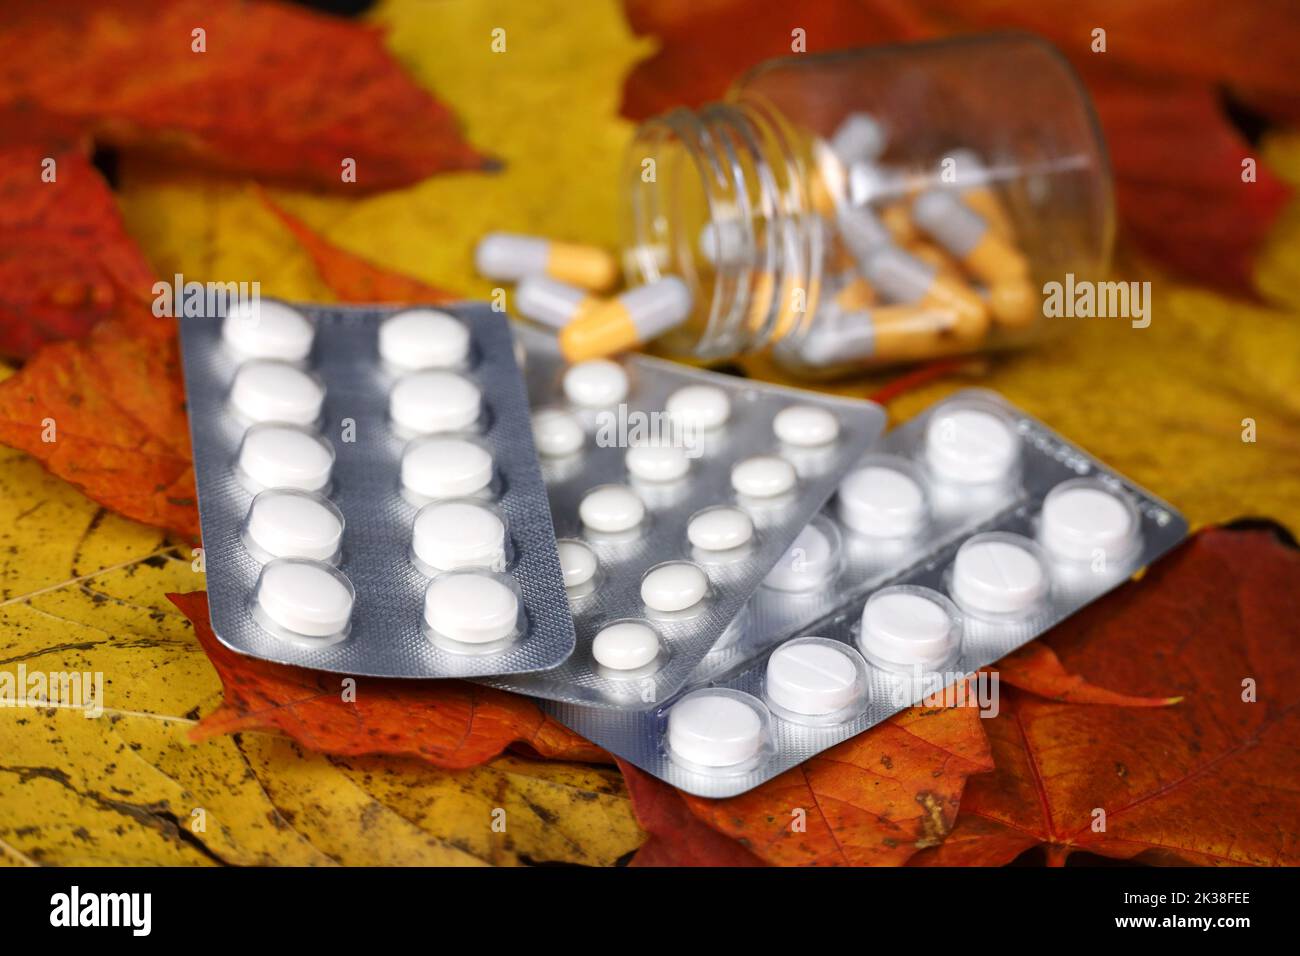 Pills on autumn maple leaves, bottle with scattered capsules. Pharmacy, antidepressants, vitamins for immunity in flu season Stock Photo